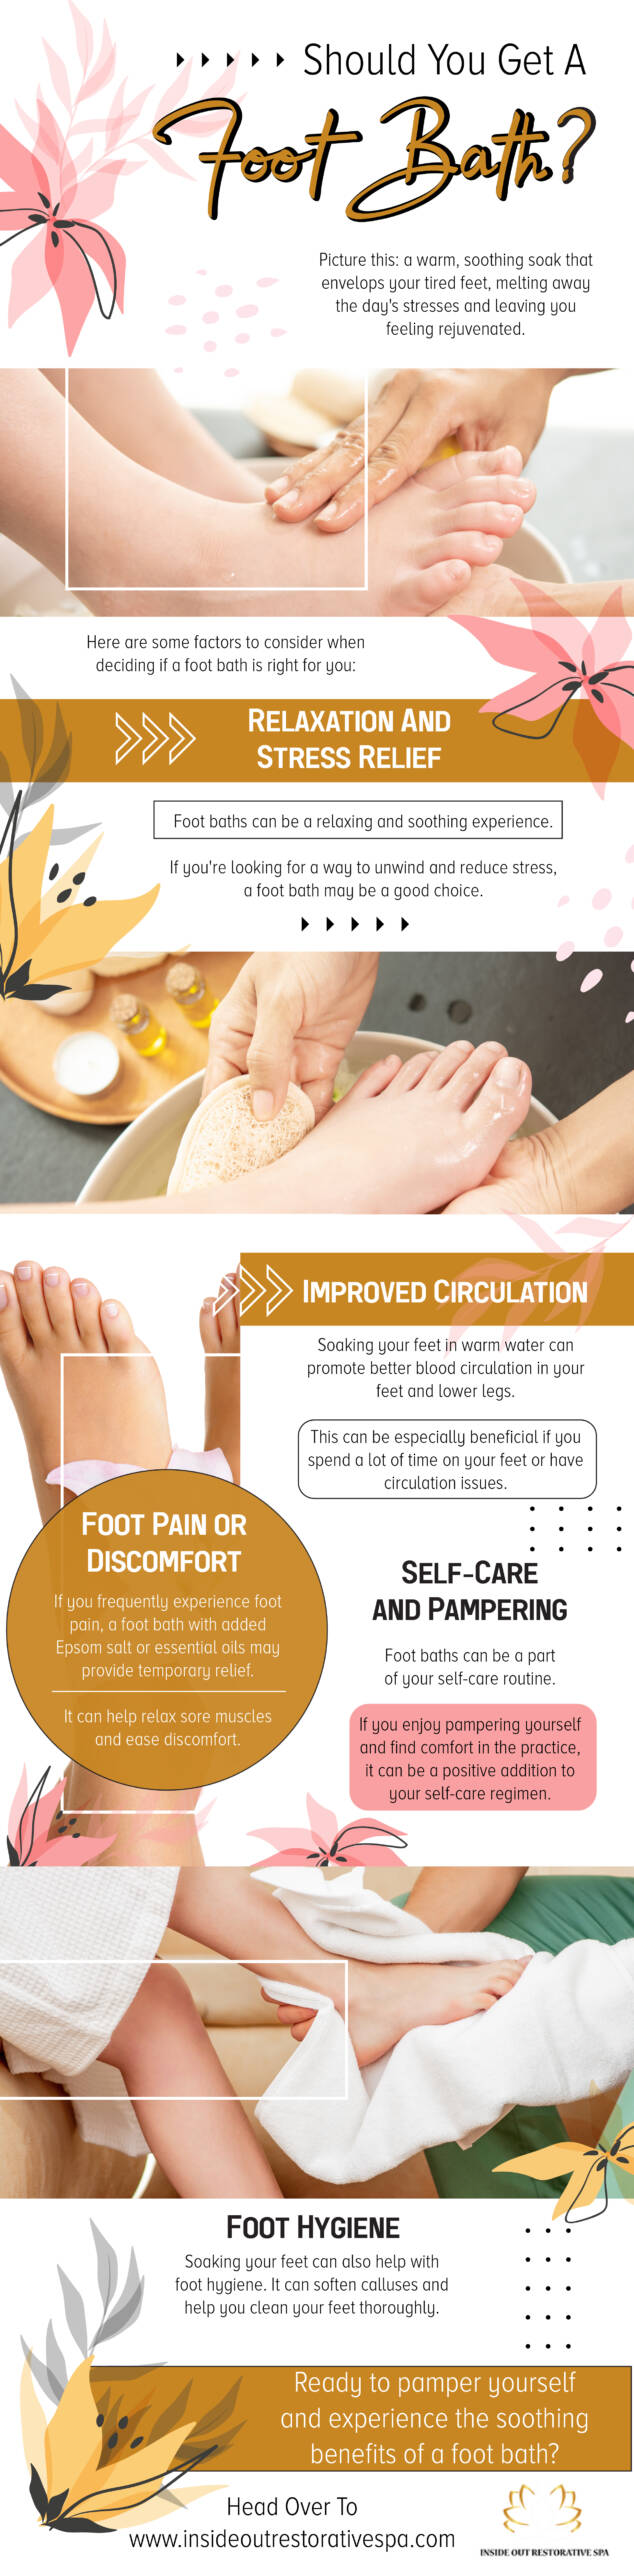 Should You Get a Foot Bath? - Infograph